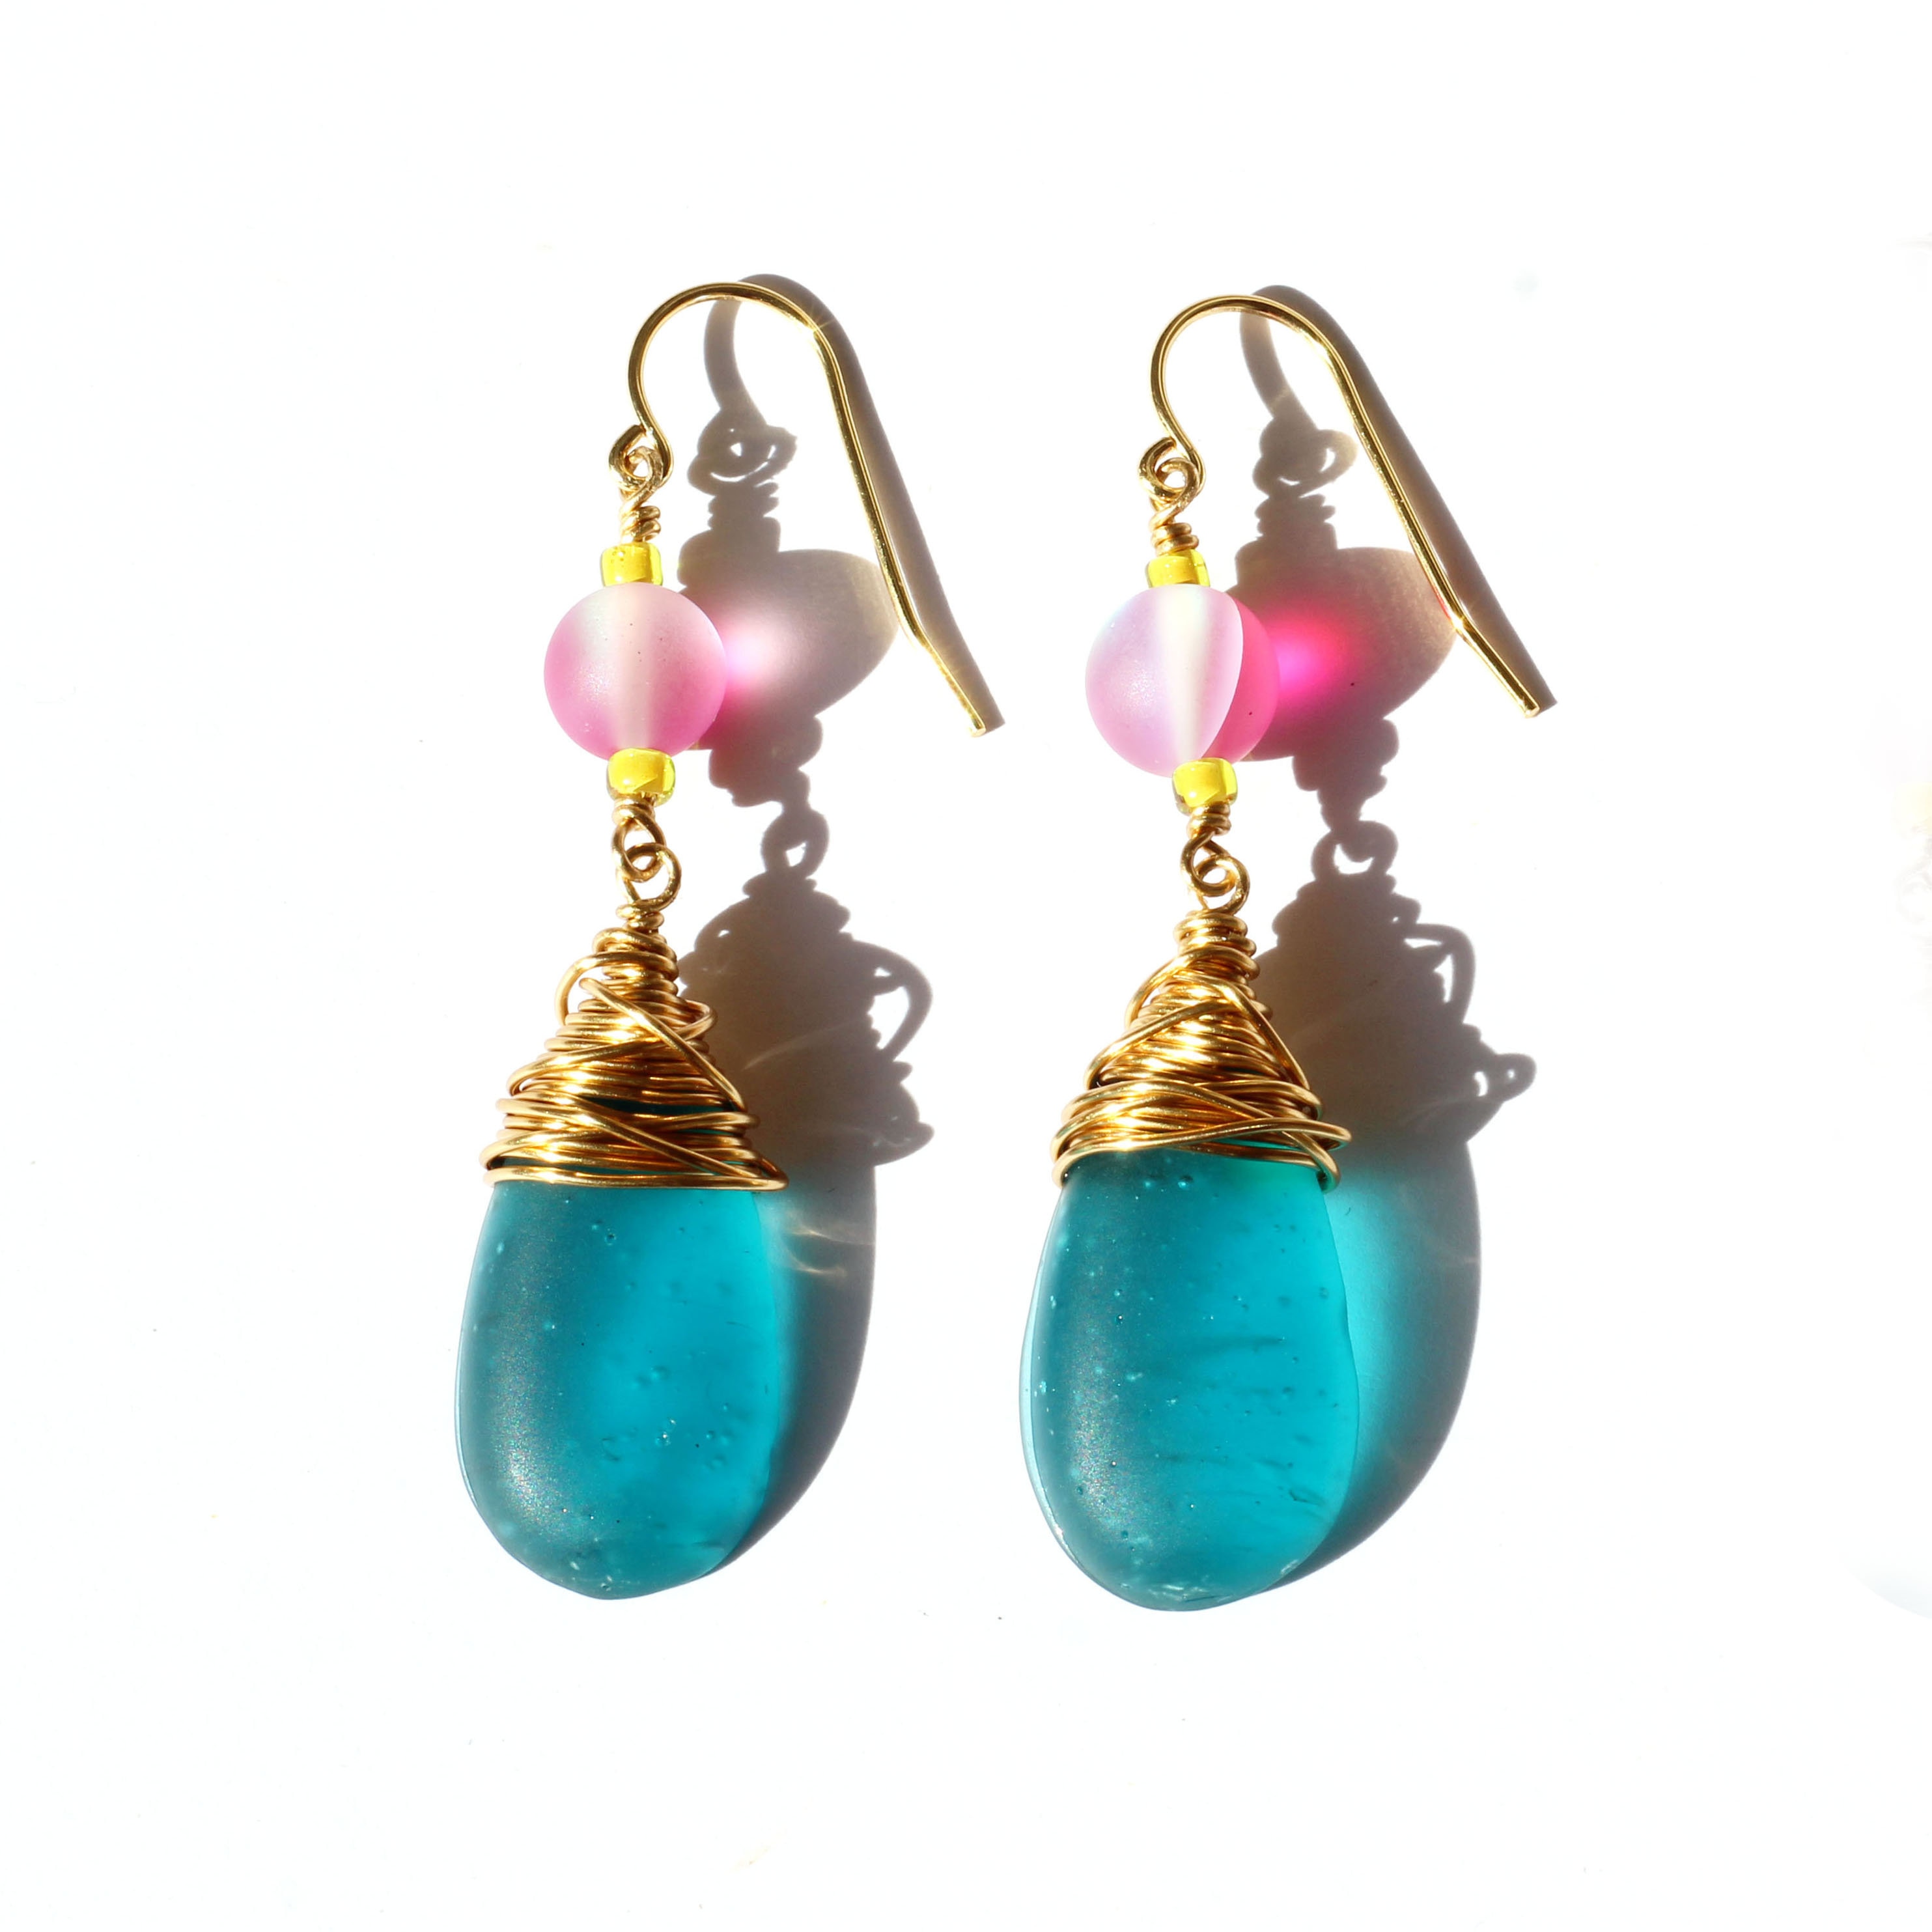 Turquoise & Silver 'Seaglass' Handmade Earrings Drop Bead Earrings Handmade Jewellery Glass Glow Beads Dangle Earrings Boho Earrings